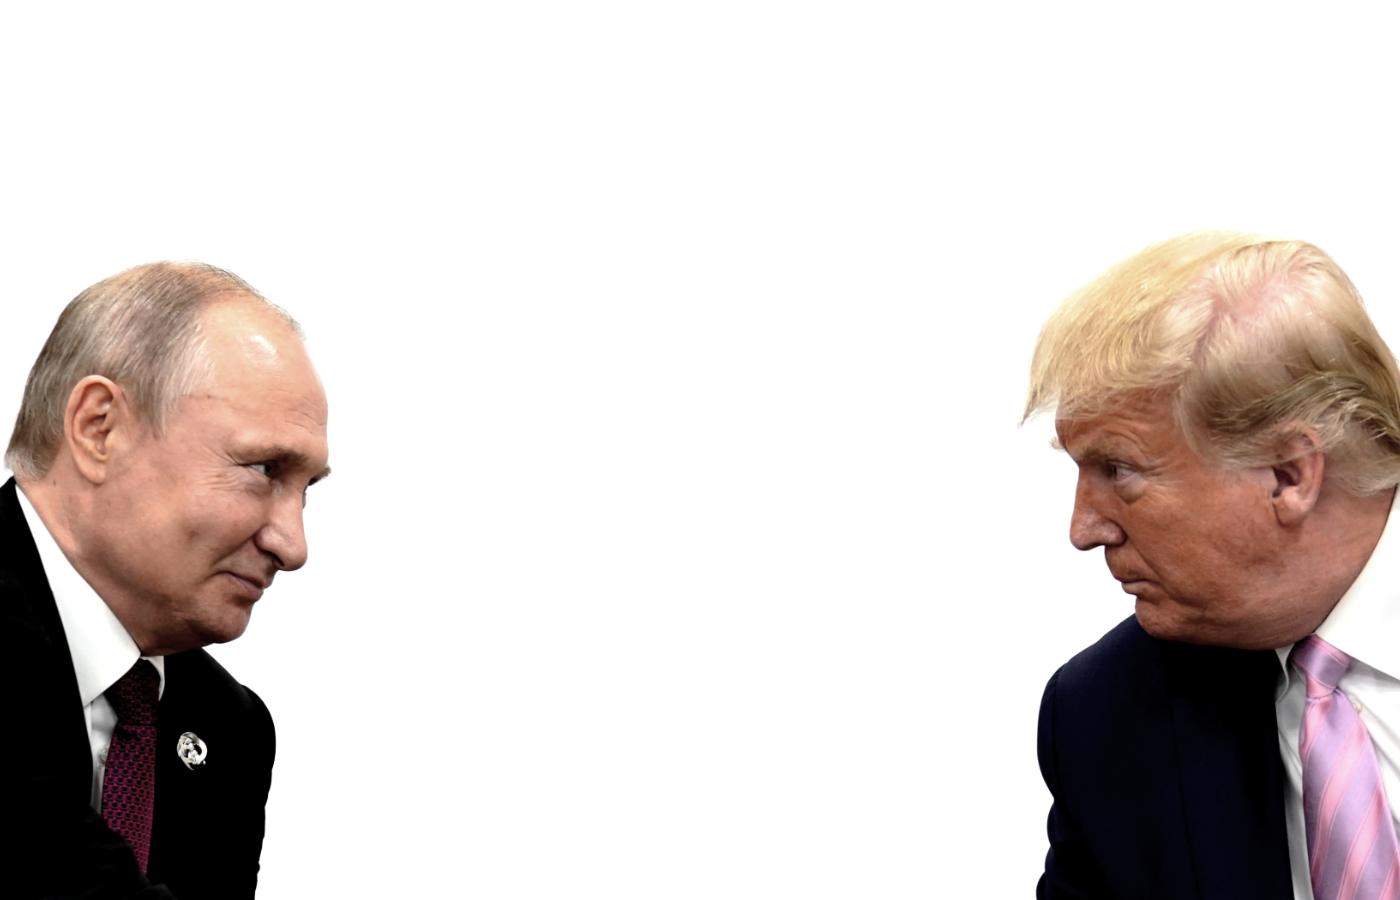 Władimir Putin i Donald Trump